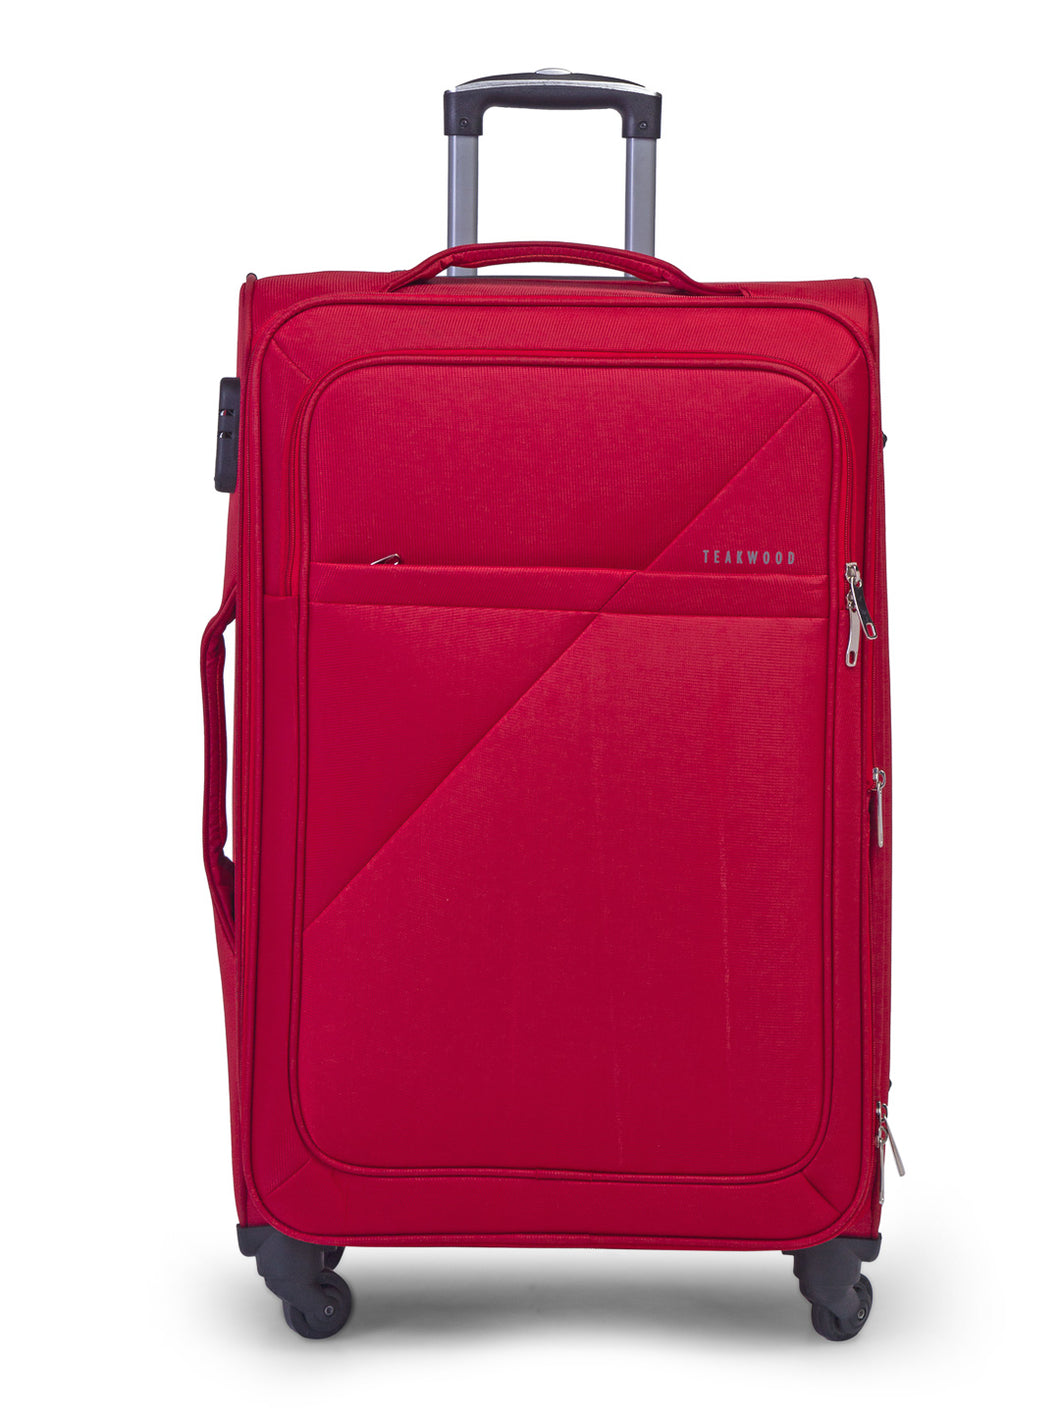 Teakwood Red Soft Sided Trolley Bag (Large)